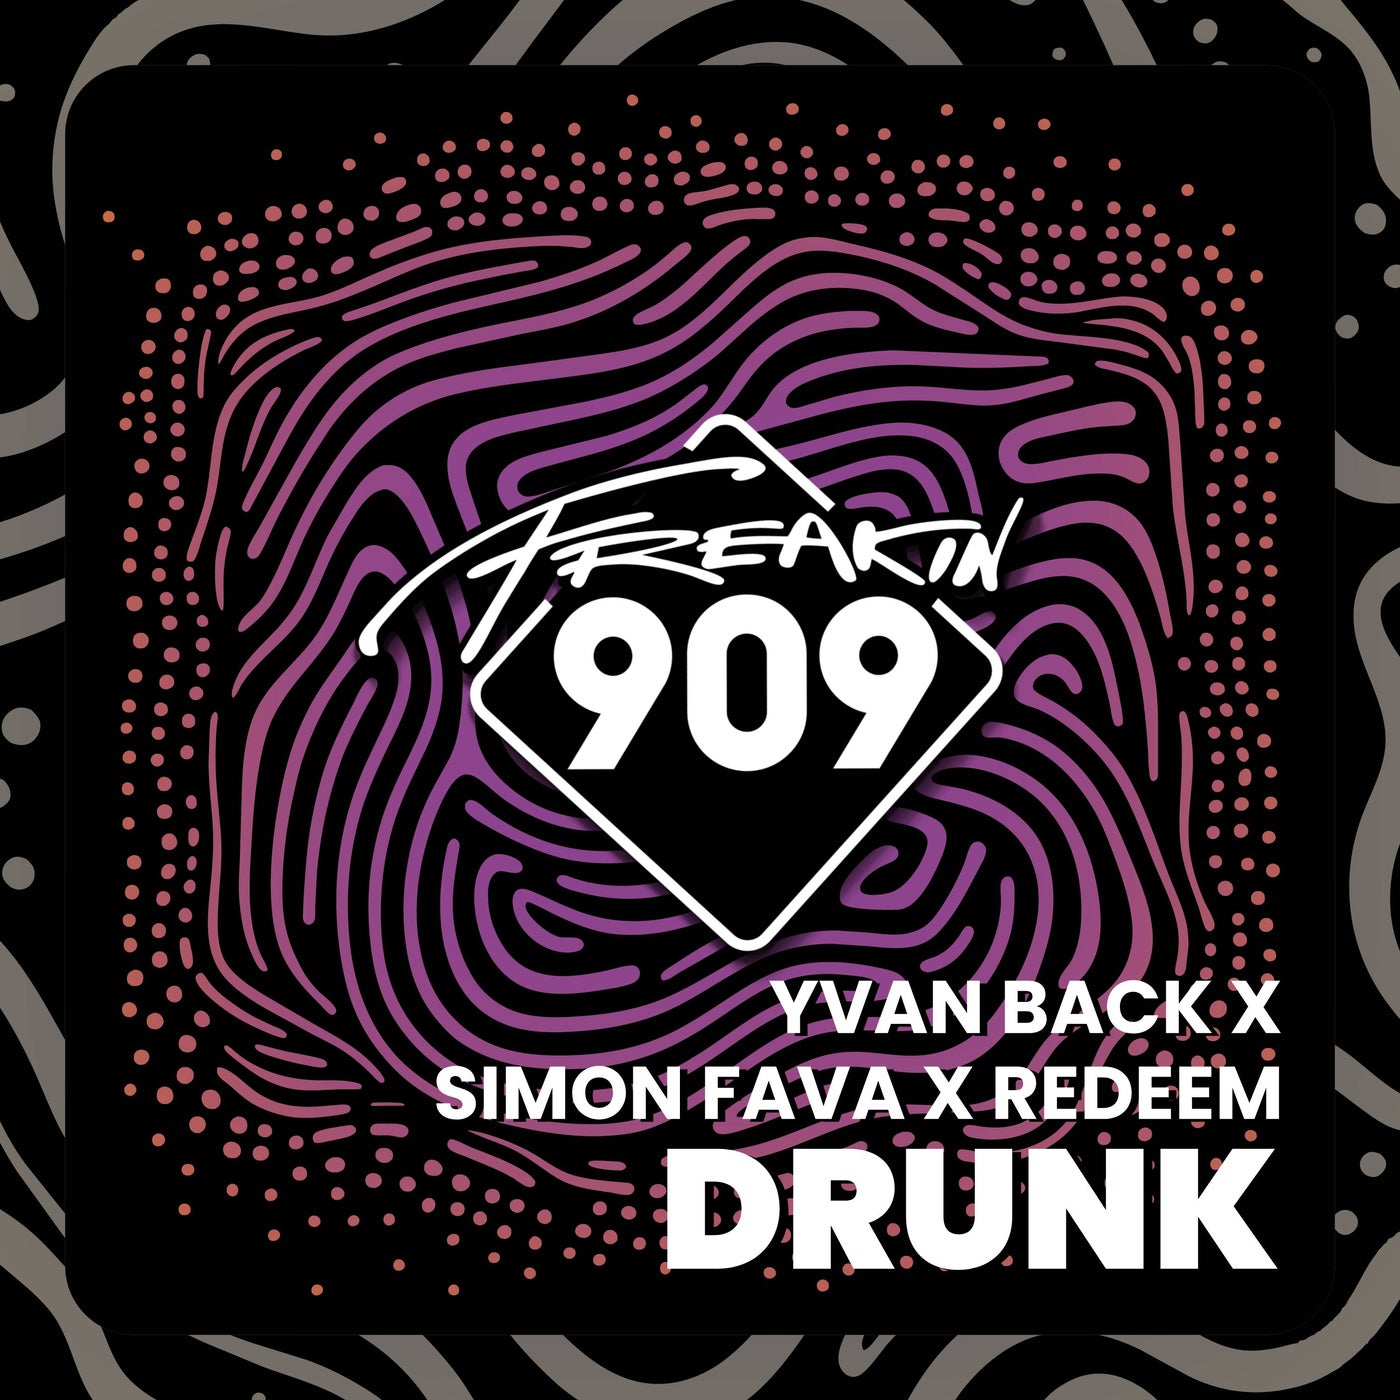 Simon Fava, Yvvan Back & Reedem - Drunk (Extended Mix)